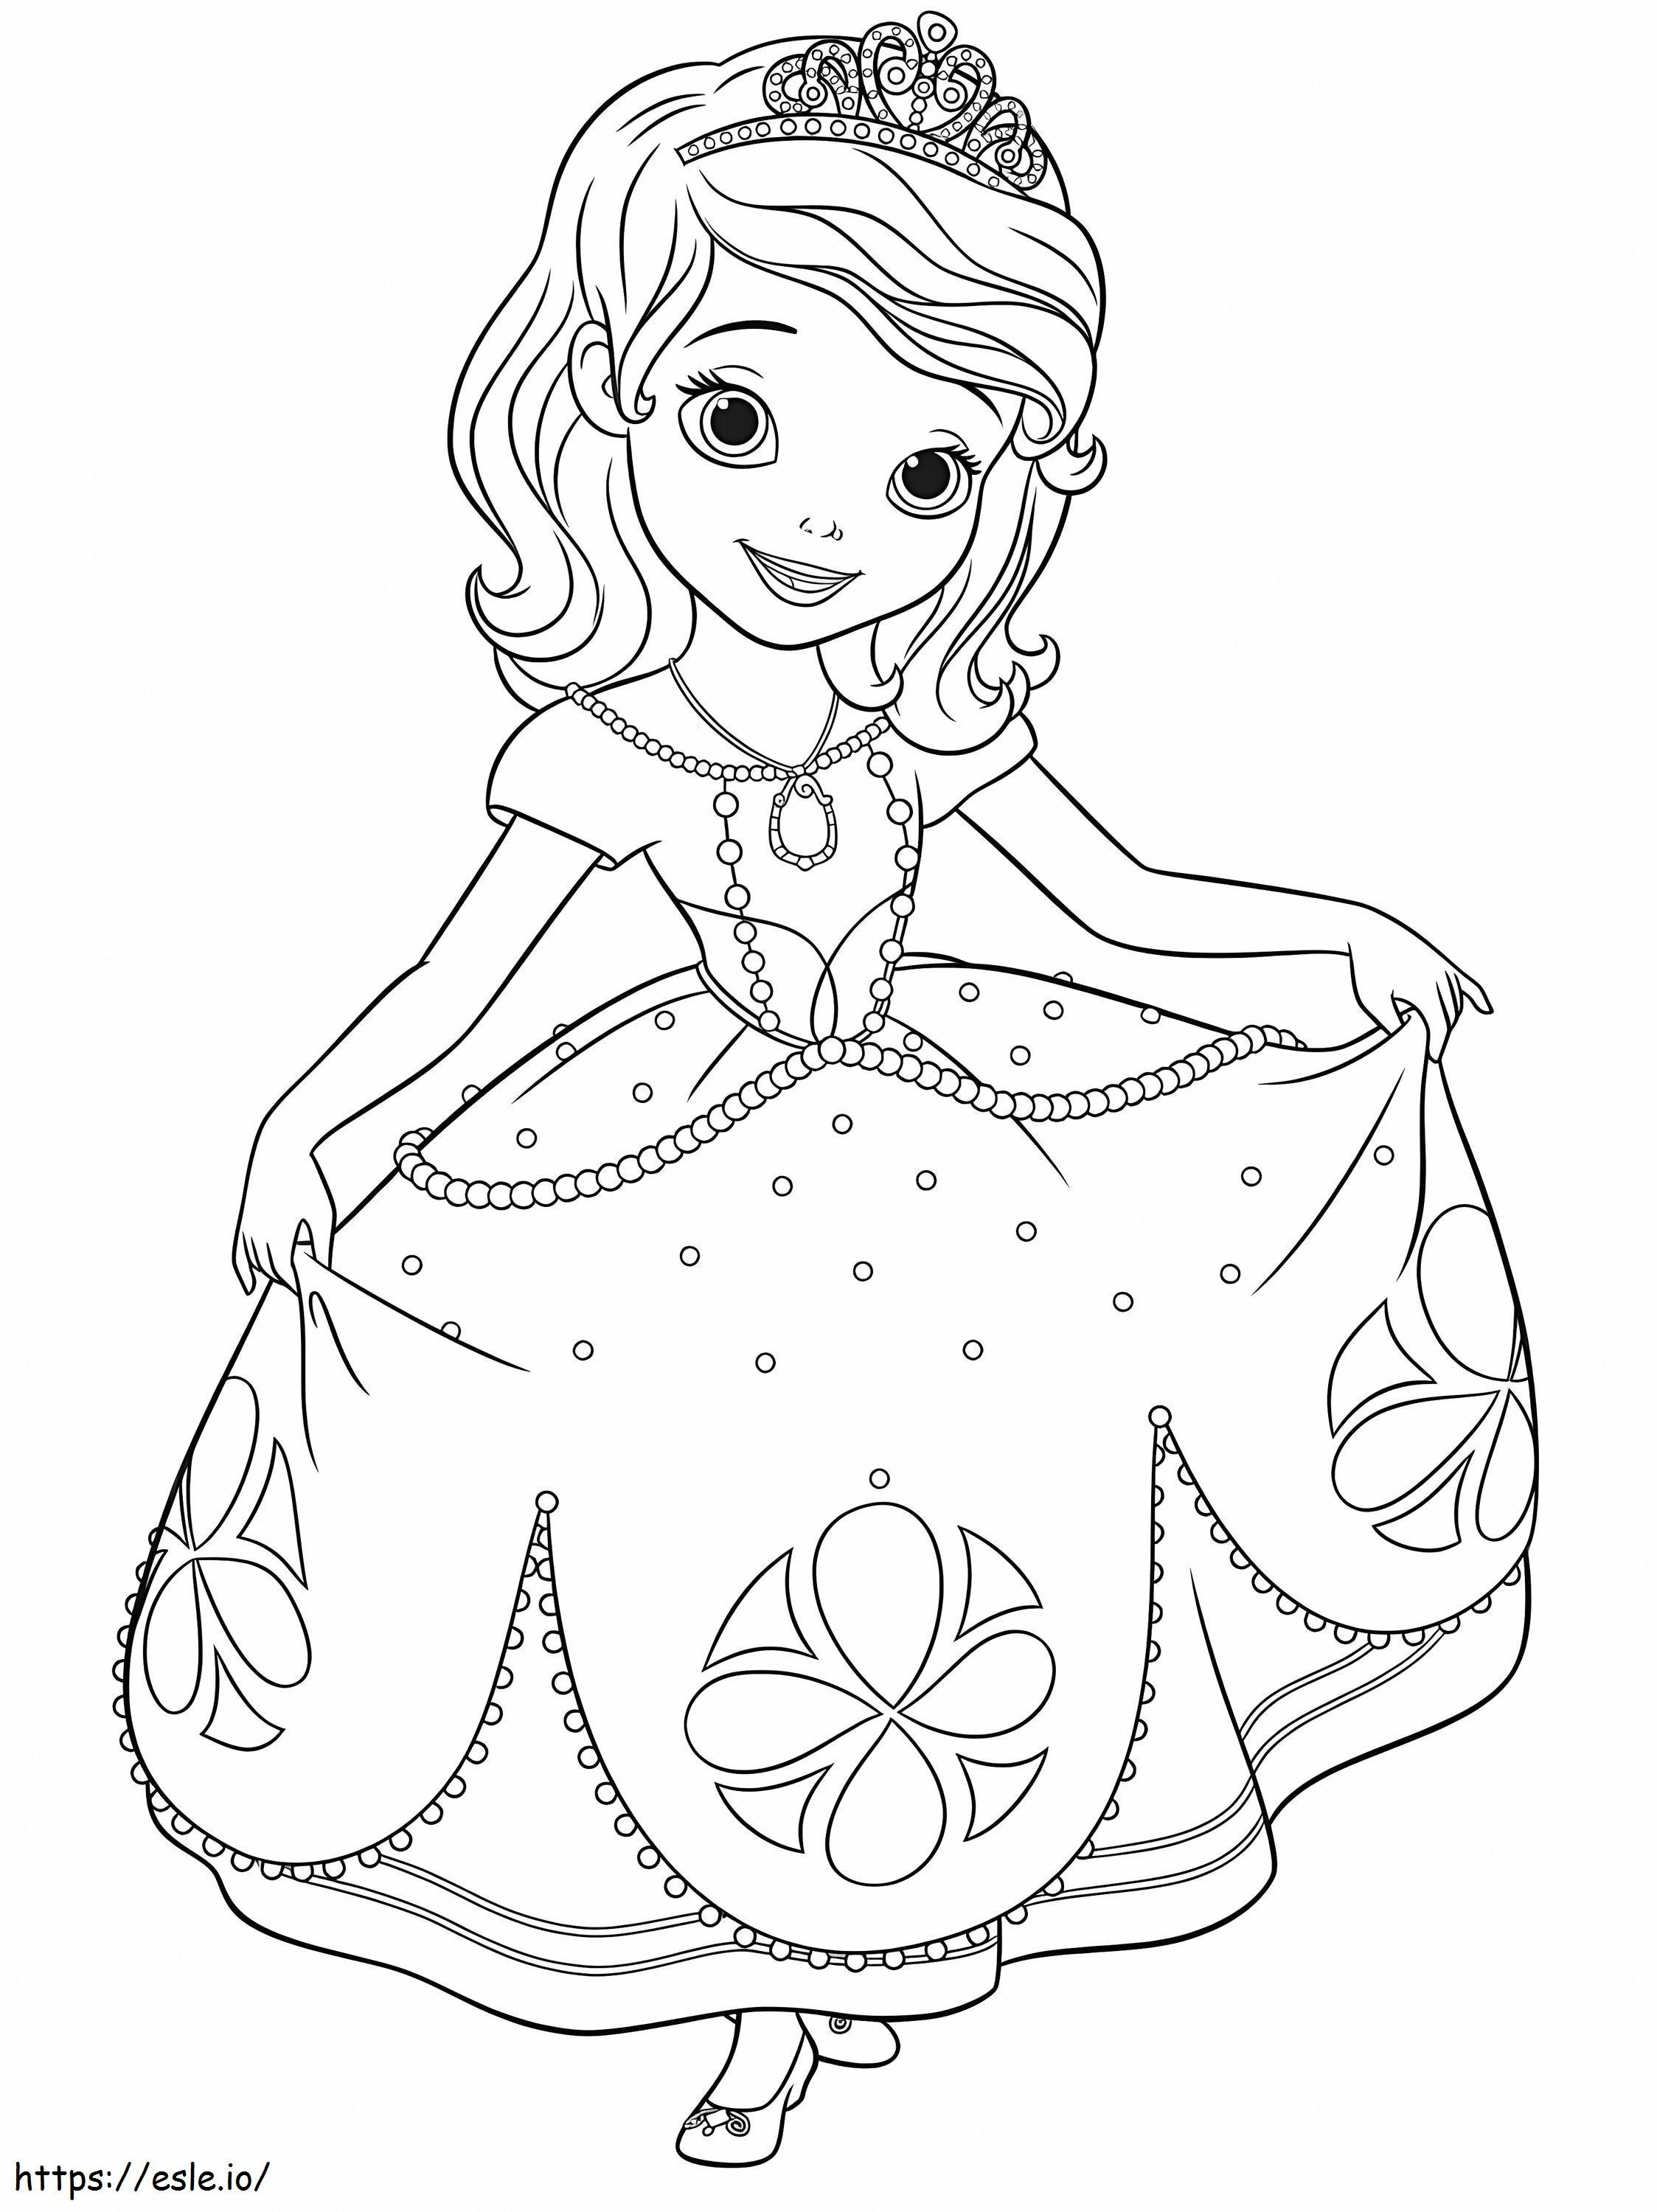 Adorable Princess Sofia 2 coloring page